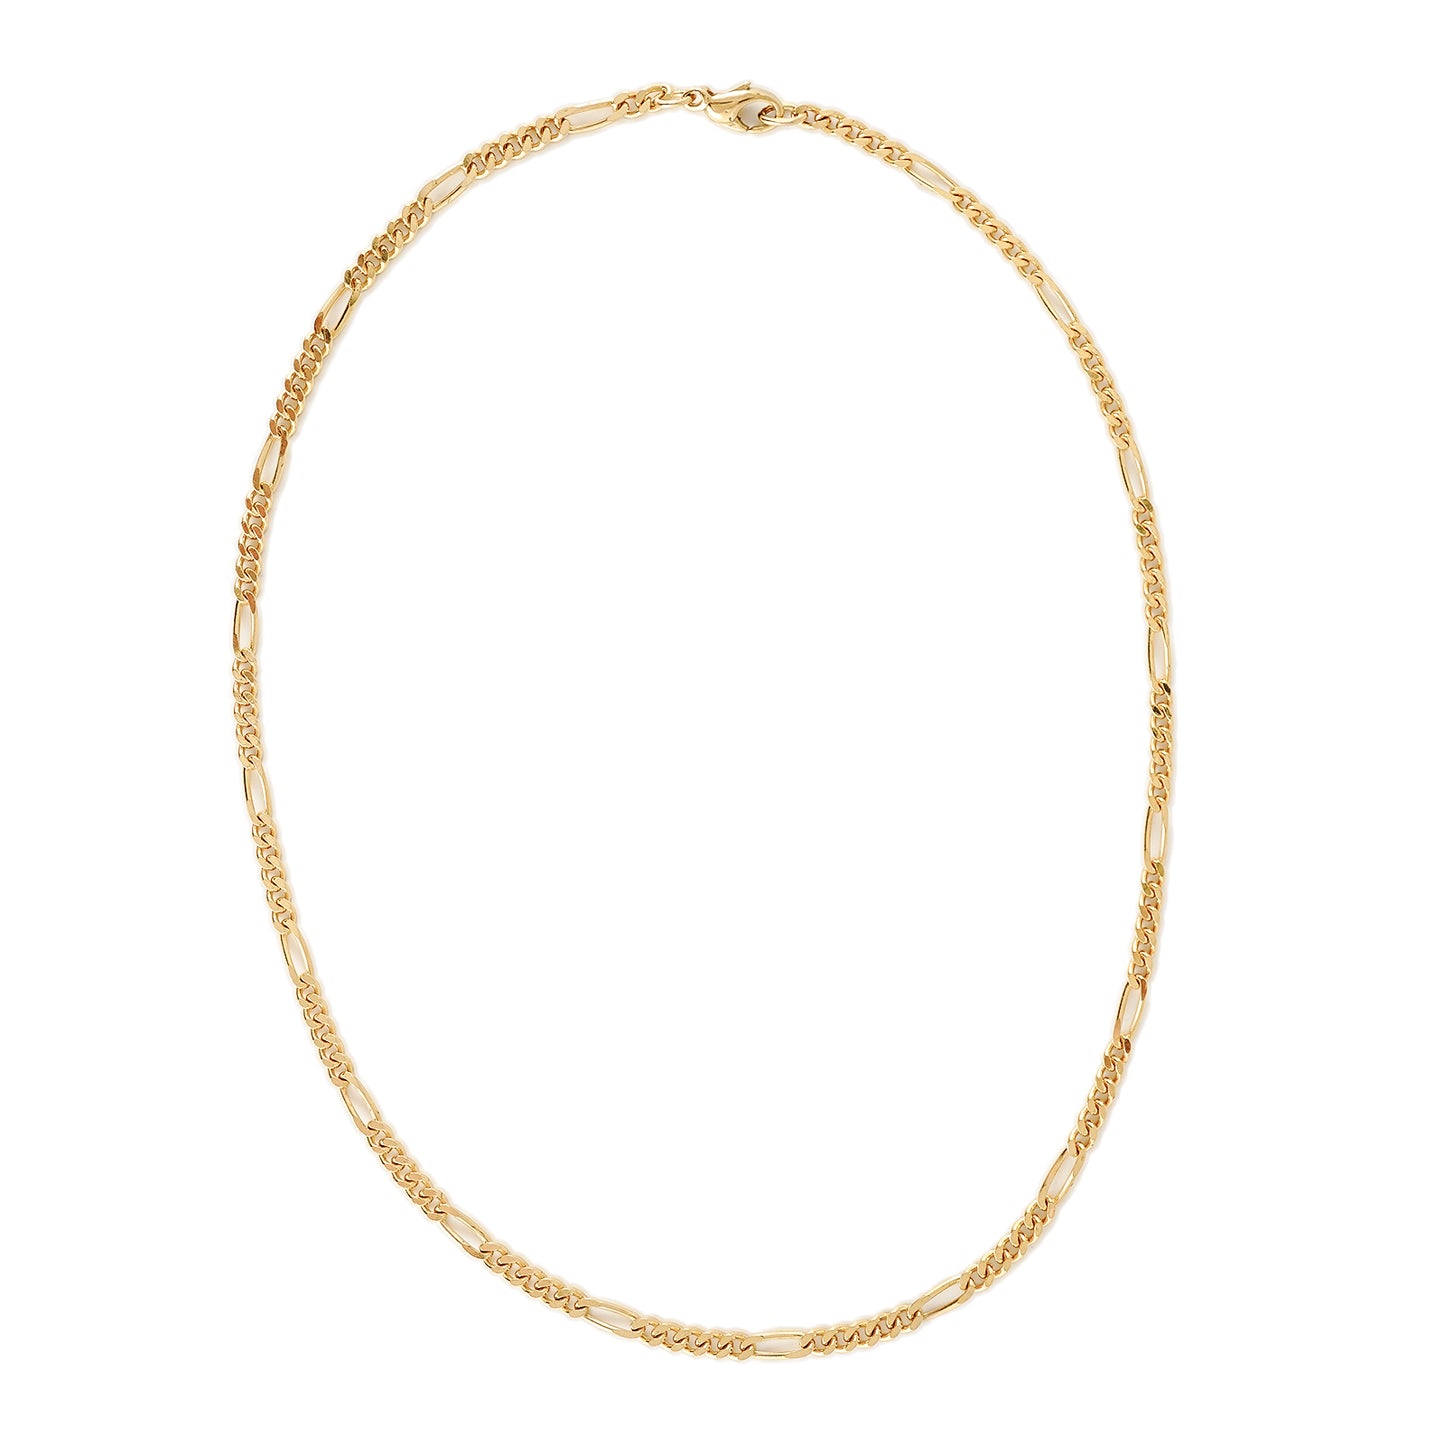 Figaro chain yellow gold 14K gold chain gold necklace pendant chain gold chain necklace